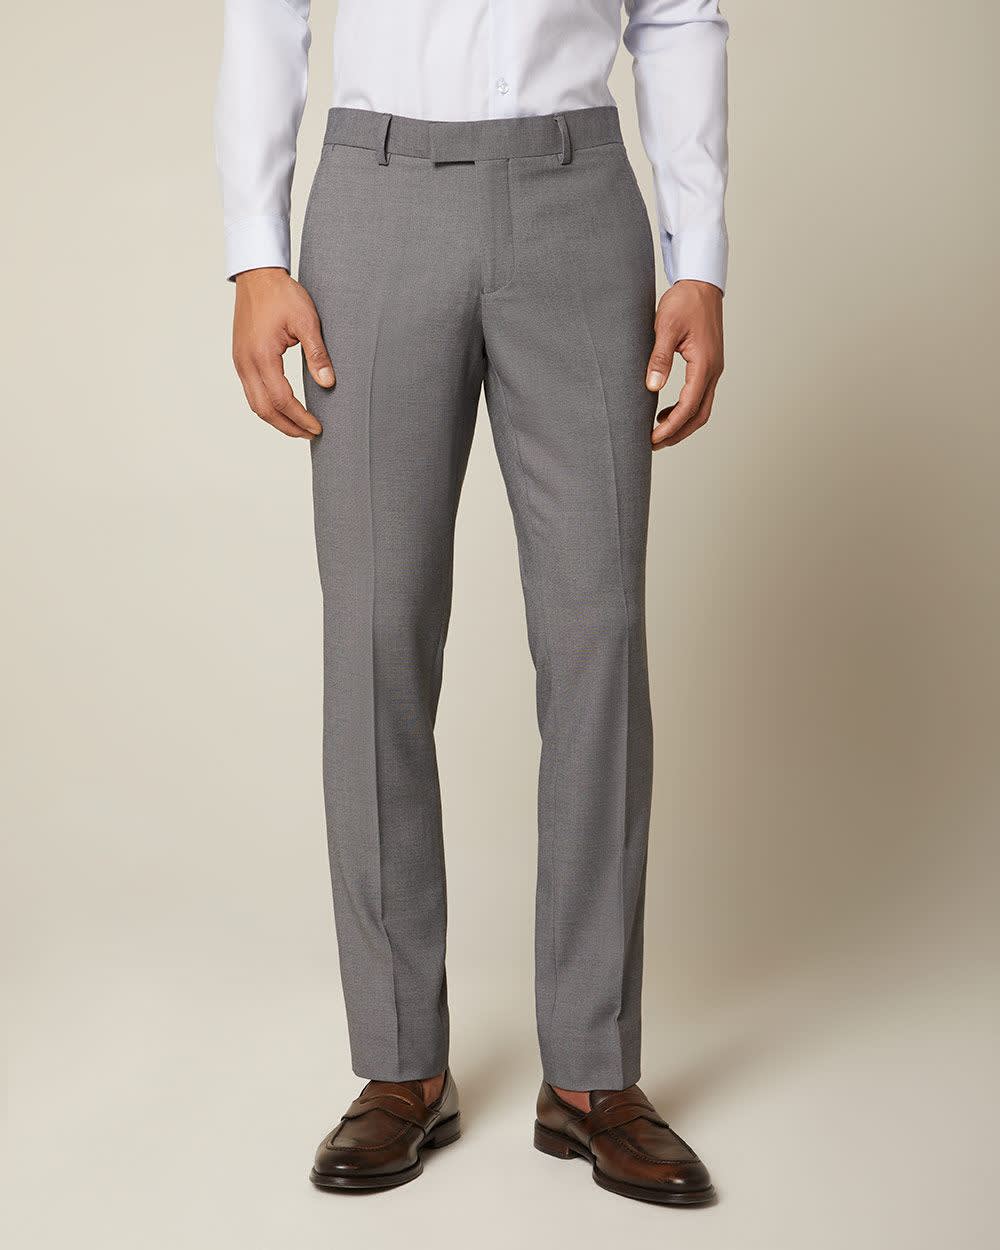 Essential Slim Fit Grey Suit Pant - 30